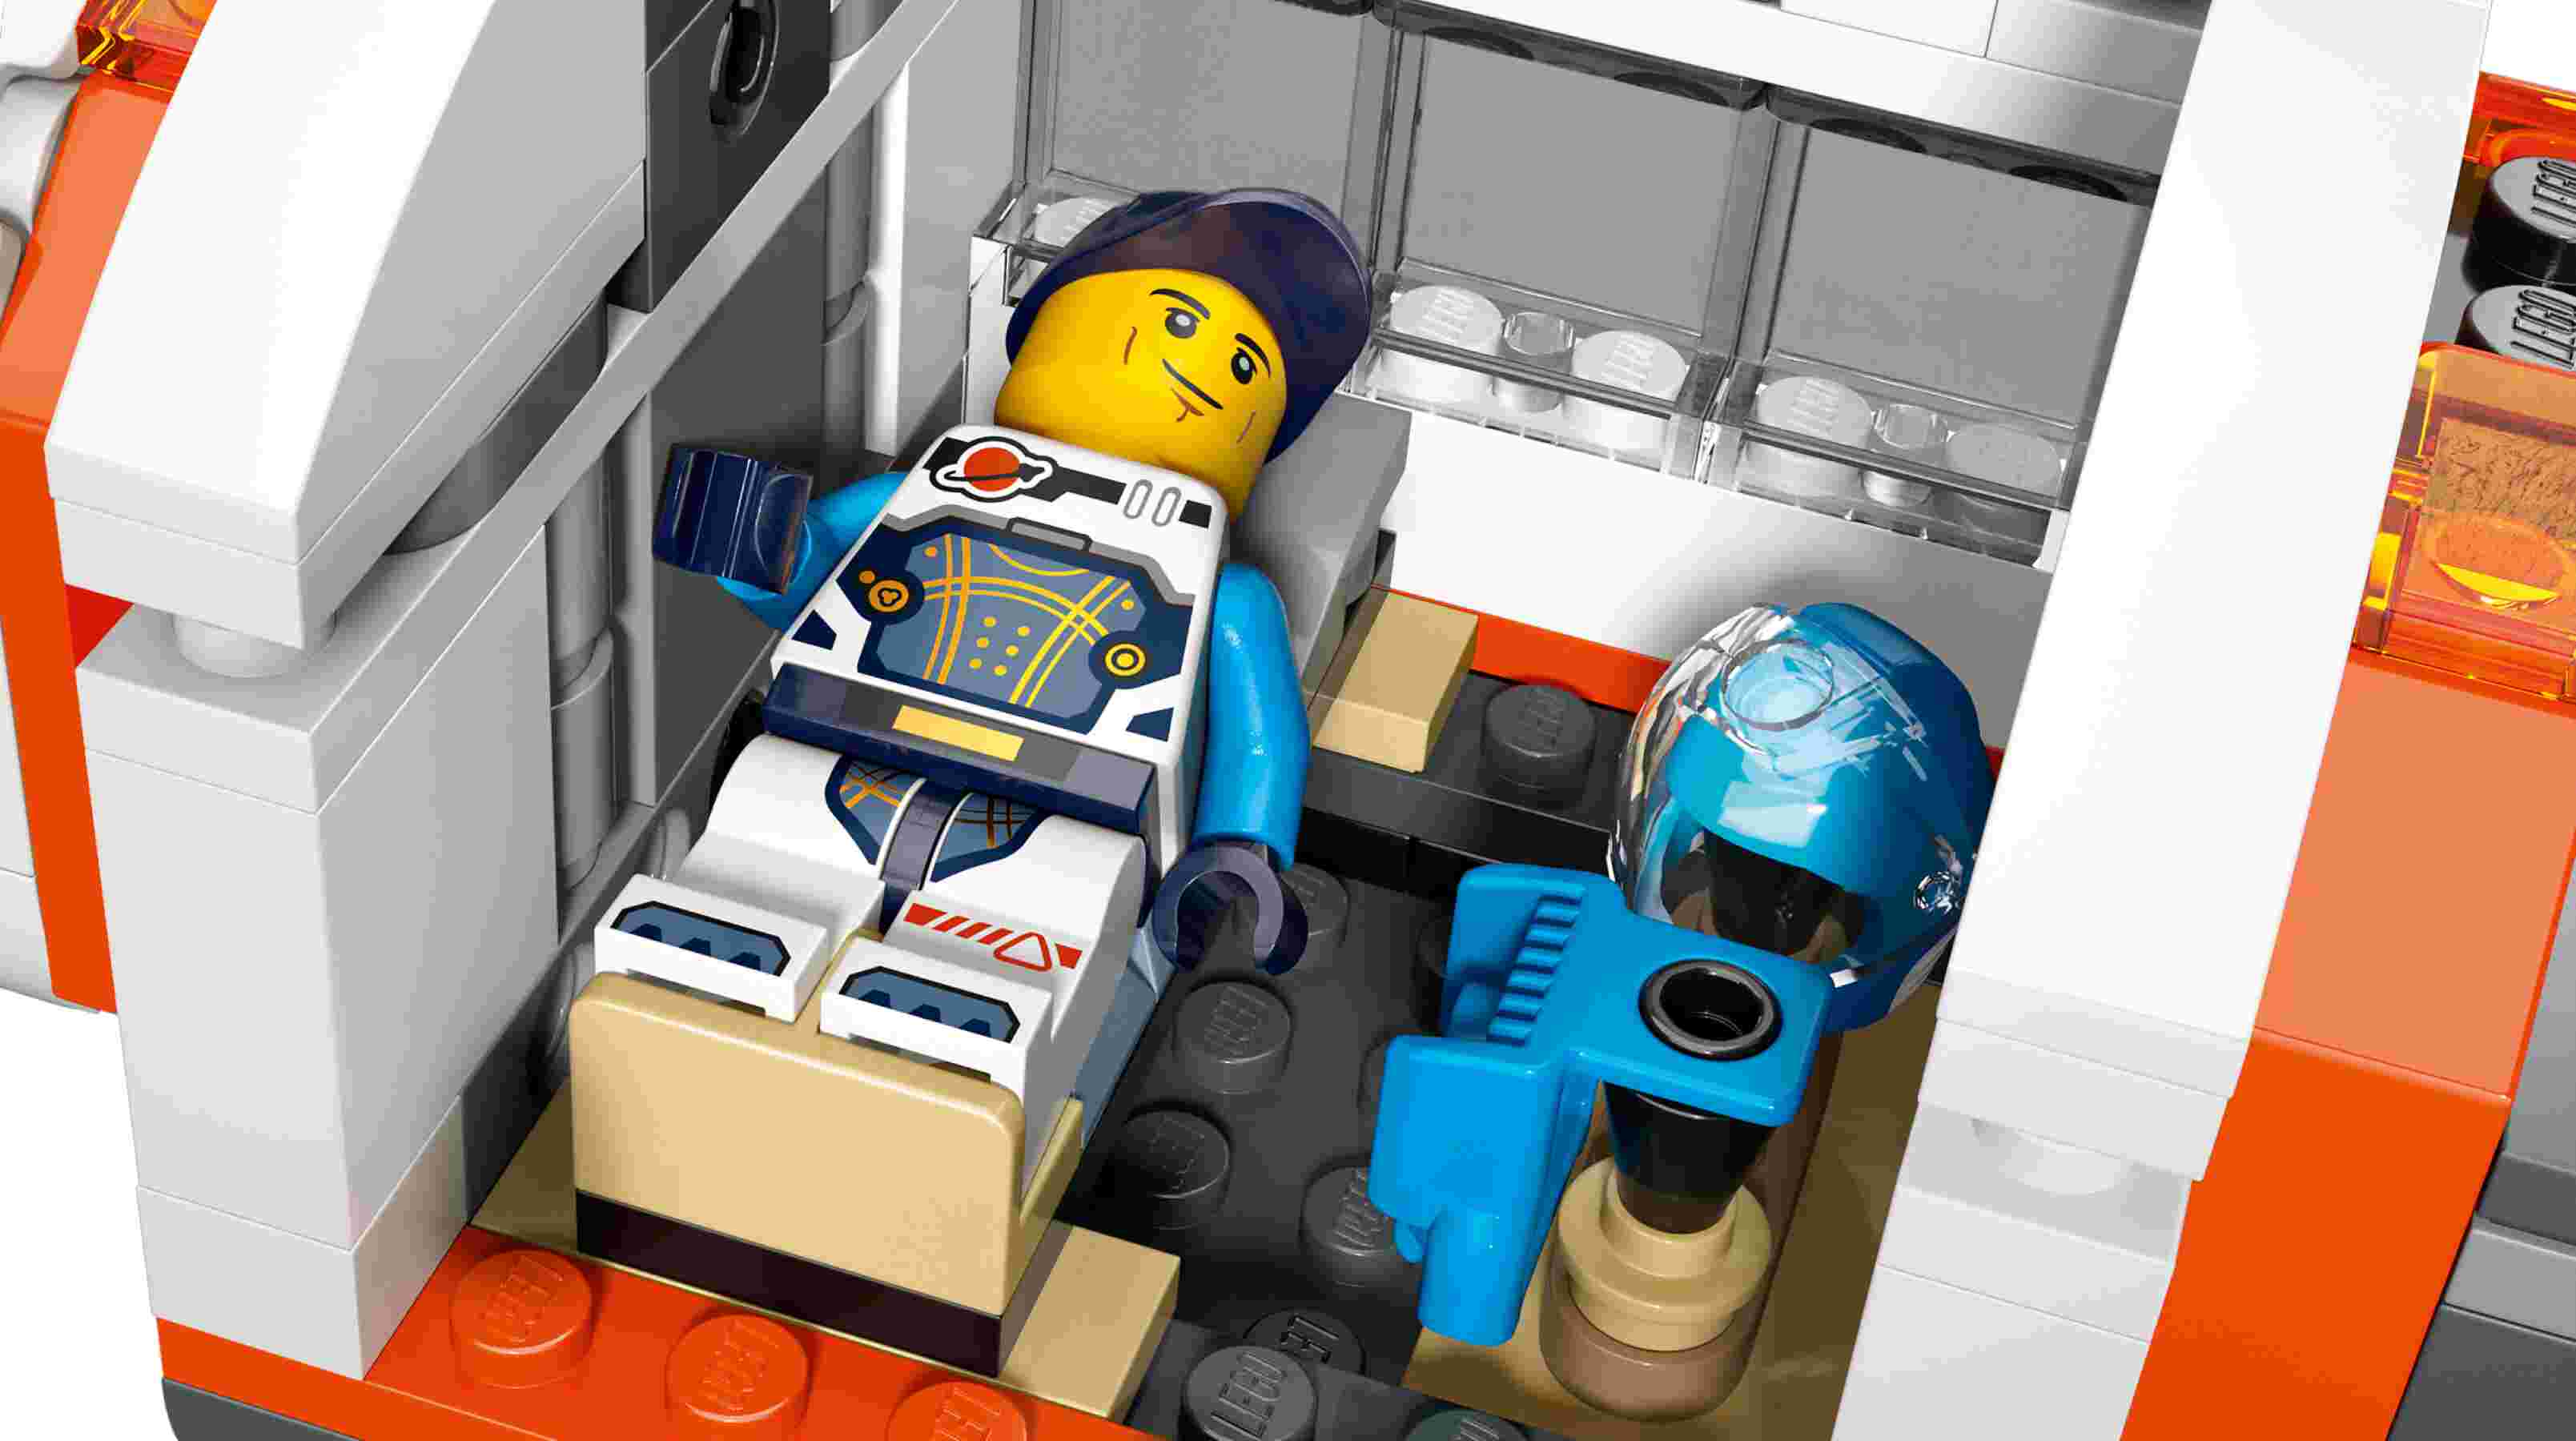 LEGO 60433 City Modulare Raumstation, 6 Astronauten, Raumkapselmodule Raumschiff